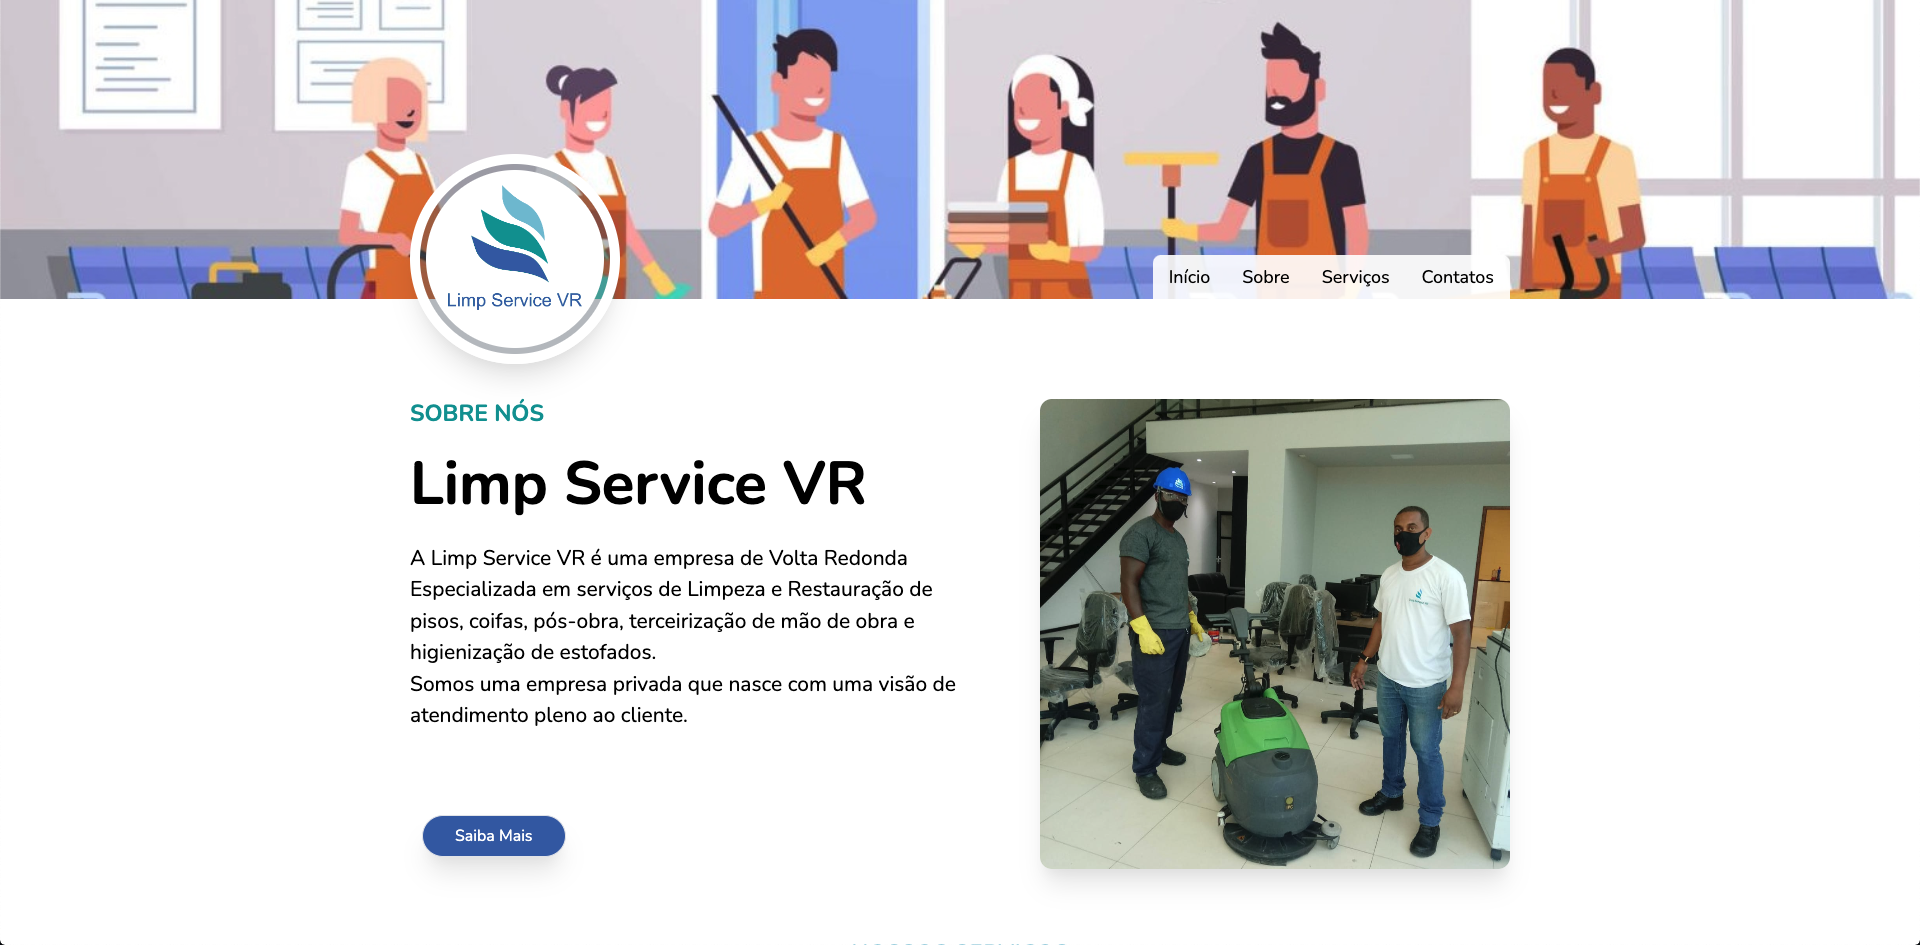 Limp Service VR